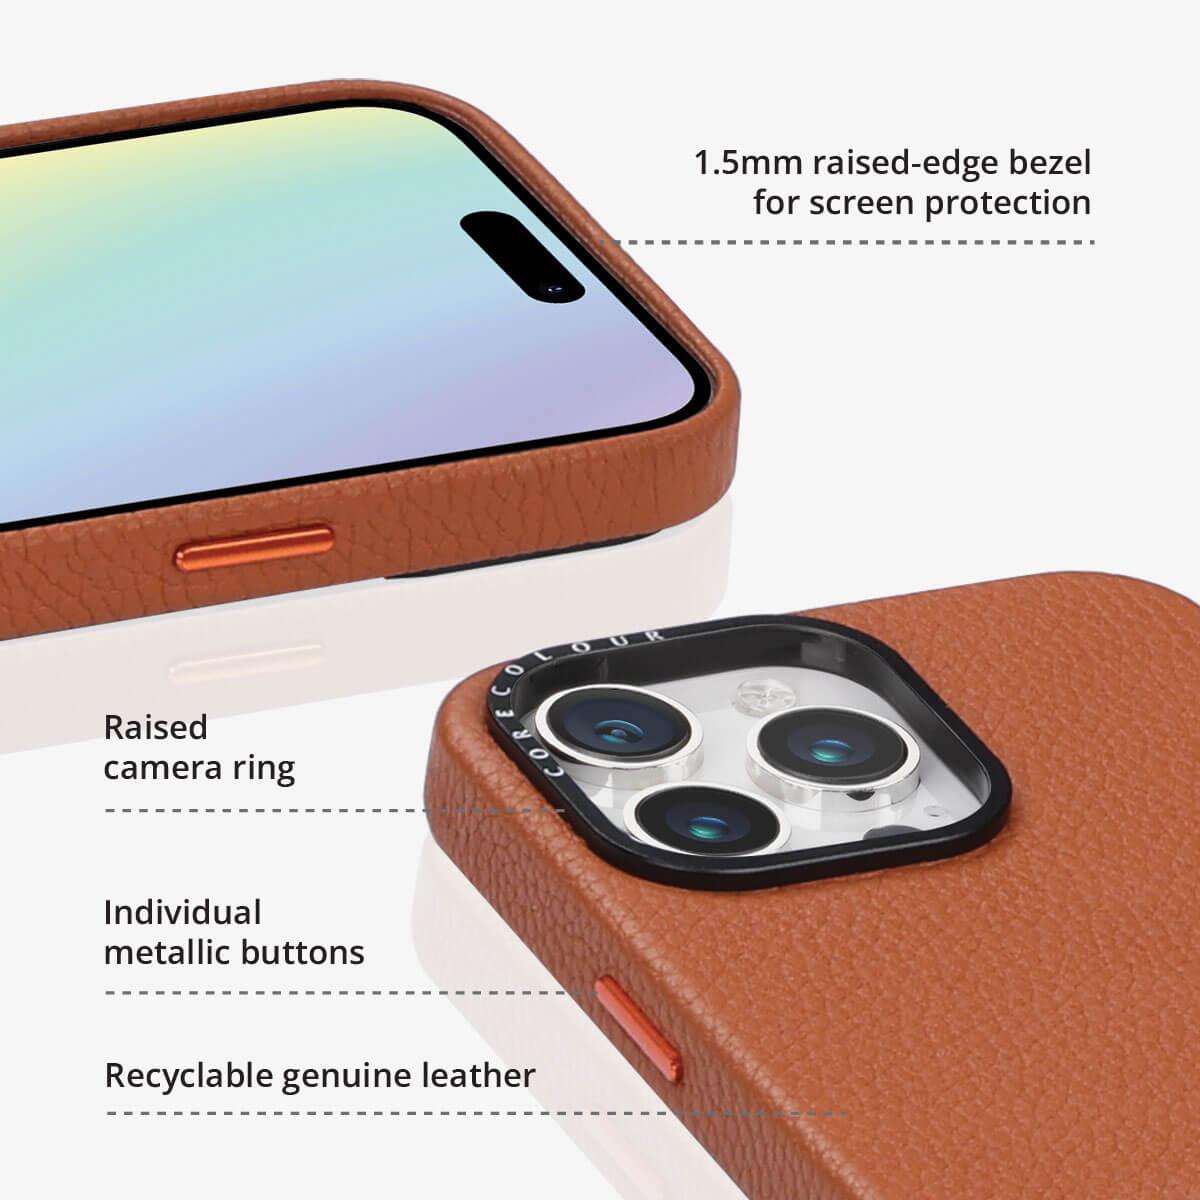 iPhone 12 Pro Pink Genuine Leather Phone Case - CORECOLOUR